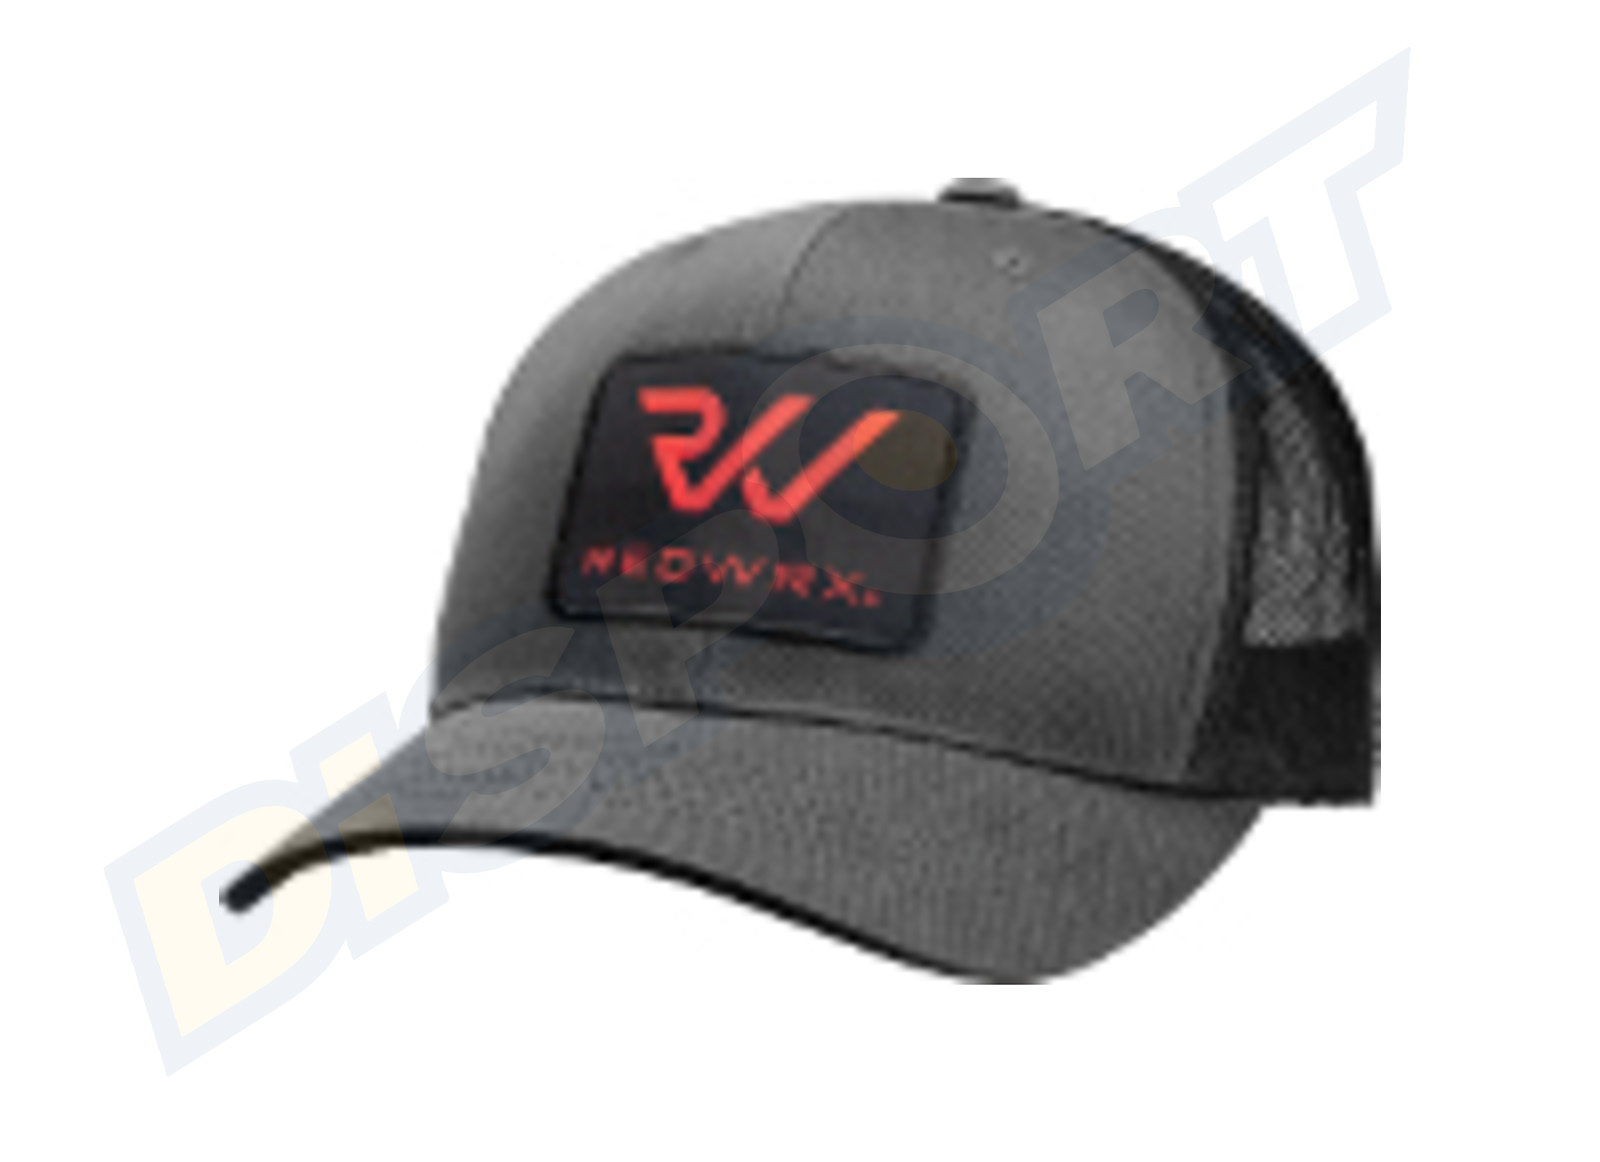 HOYT CAP REDWRX